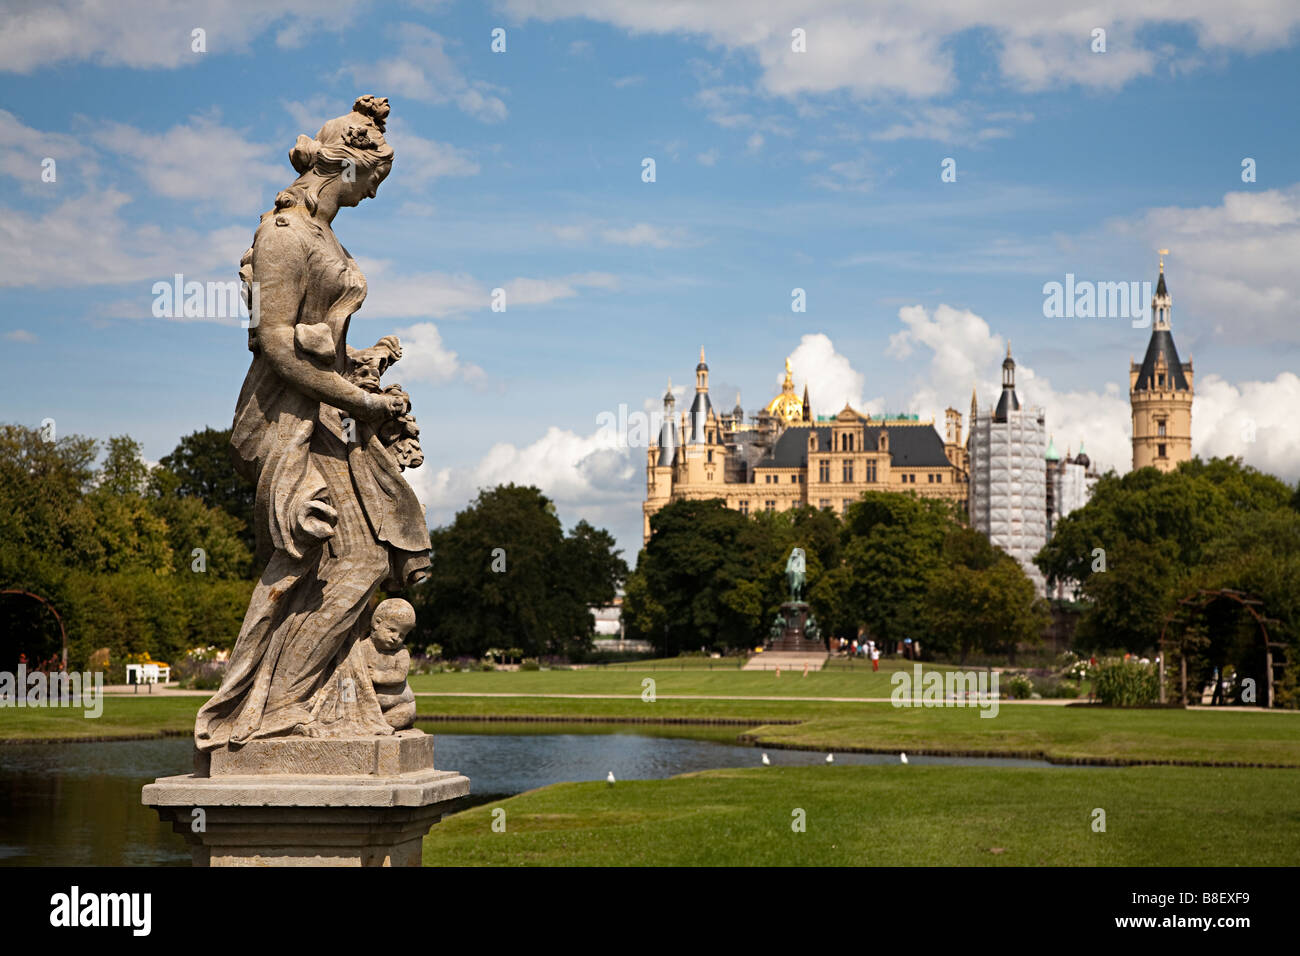 Statue in castle water gardens Schwerin Germany Stock Photo